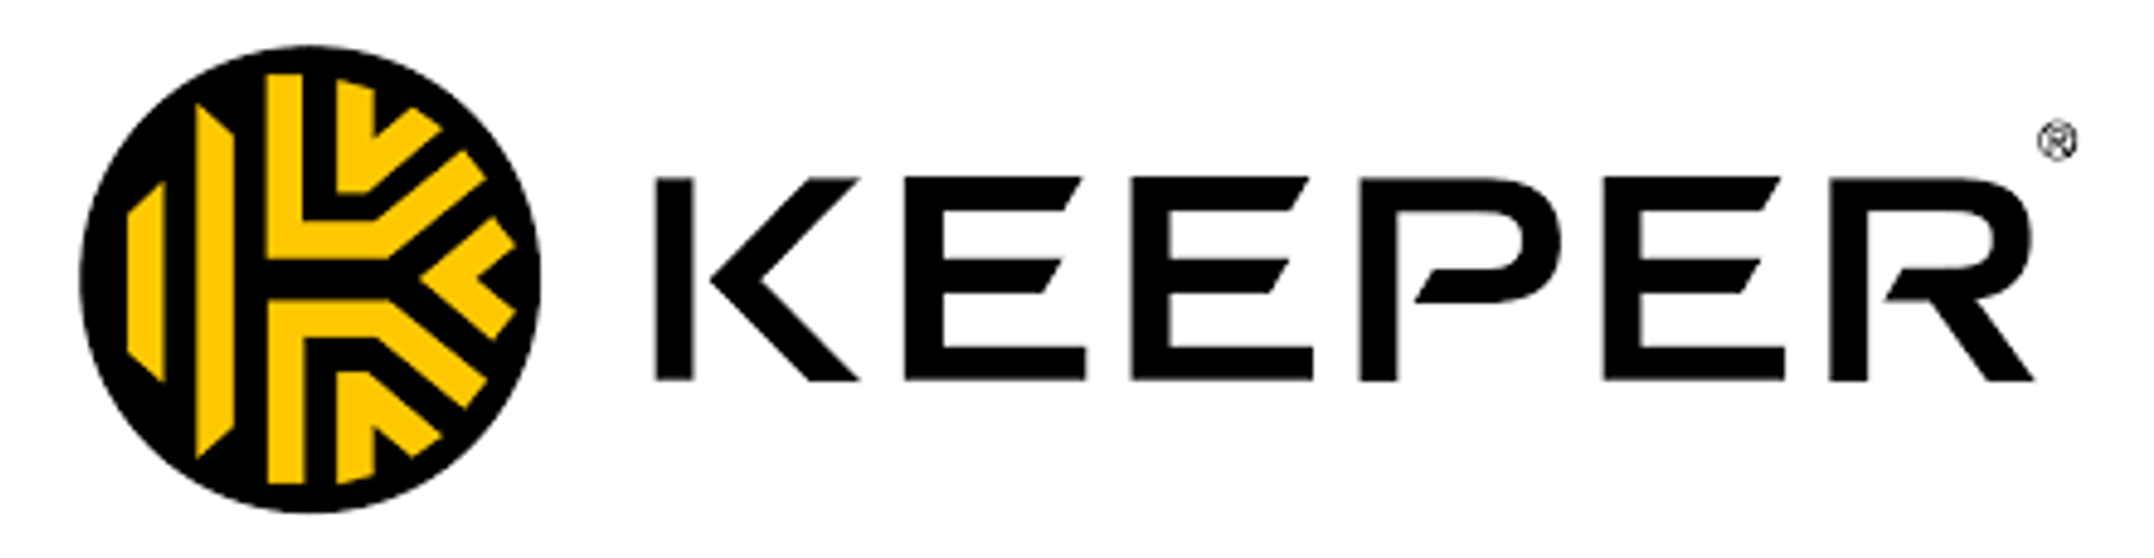 Keeper_logo_TFS_cyber security company London 